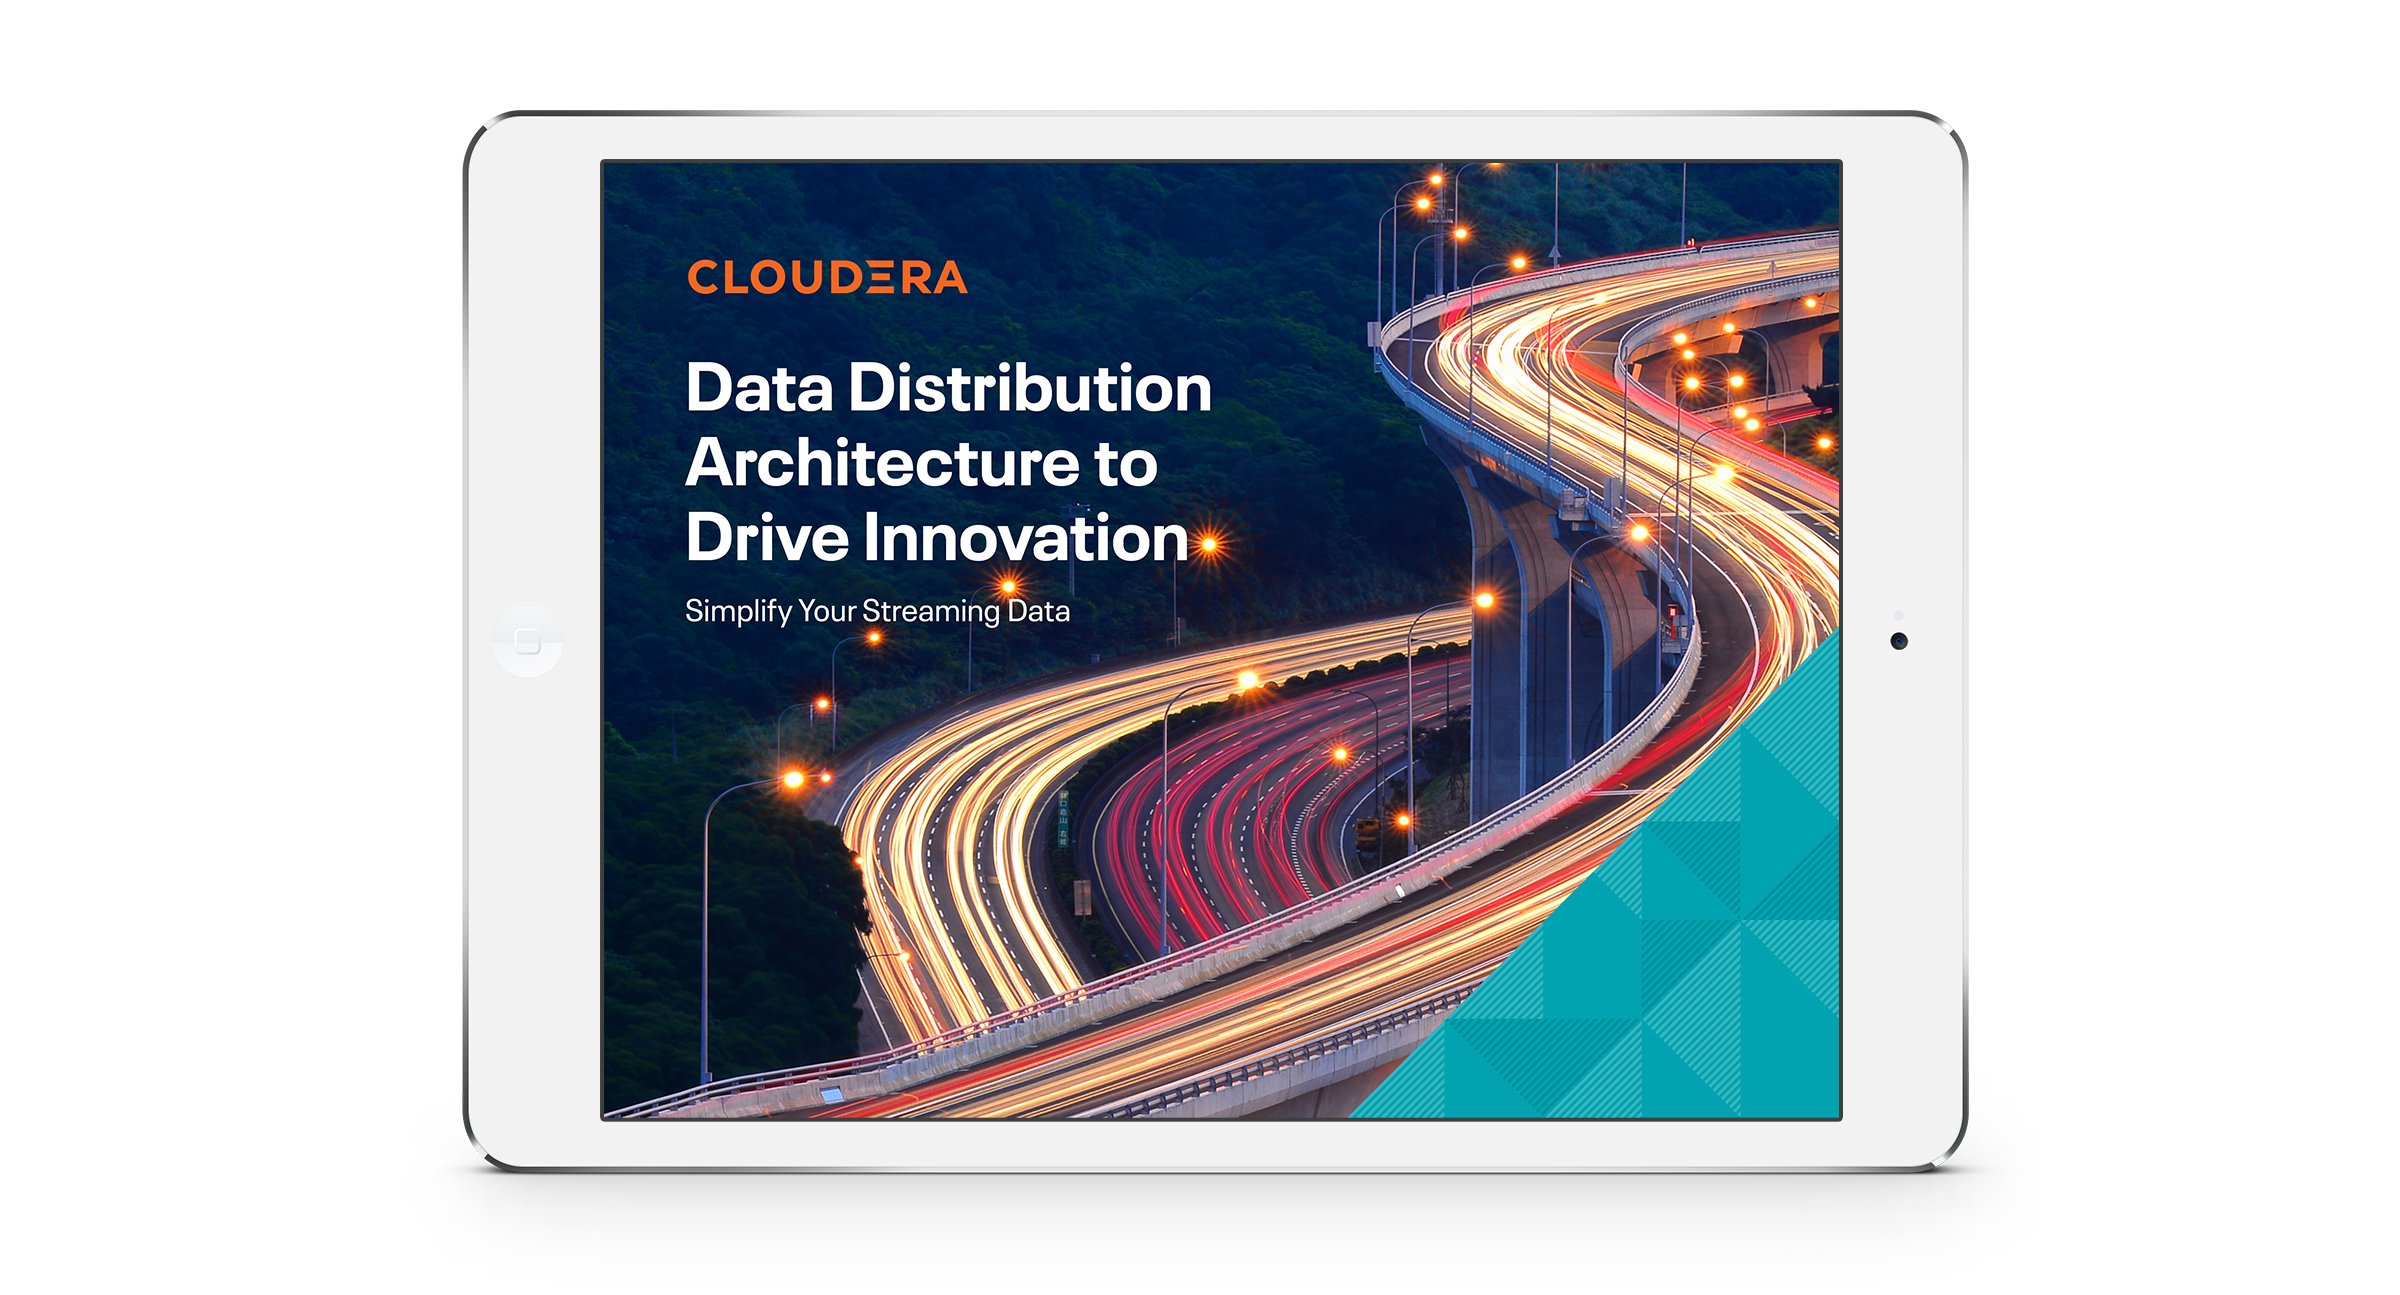 5767-cldr-Data-Distribution-Architecture-Drive-Innovation-Ebook-1.jpg